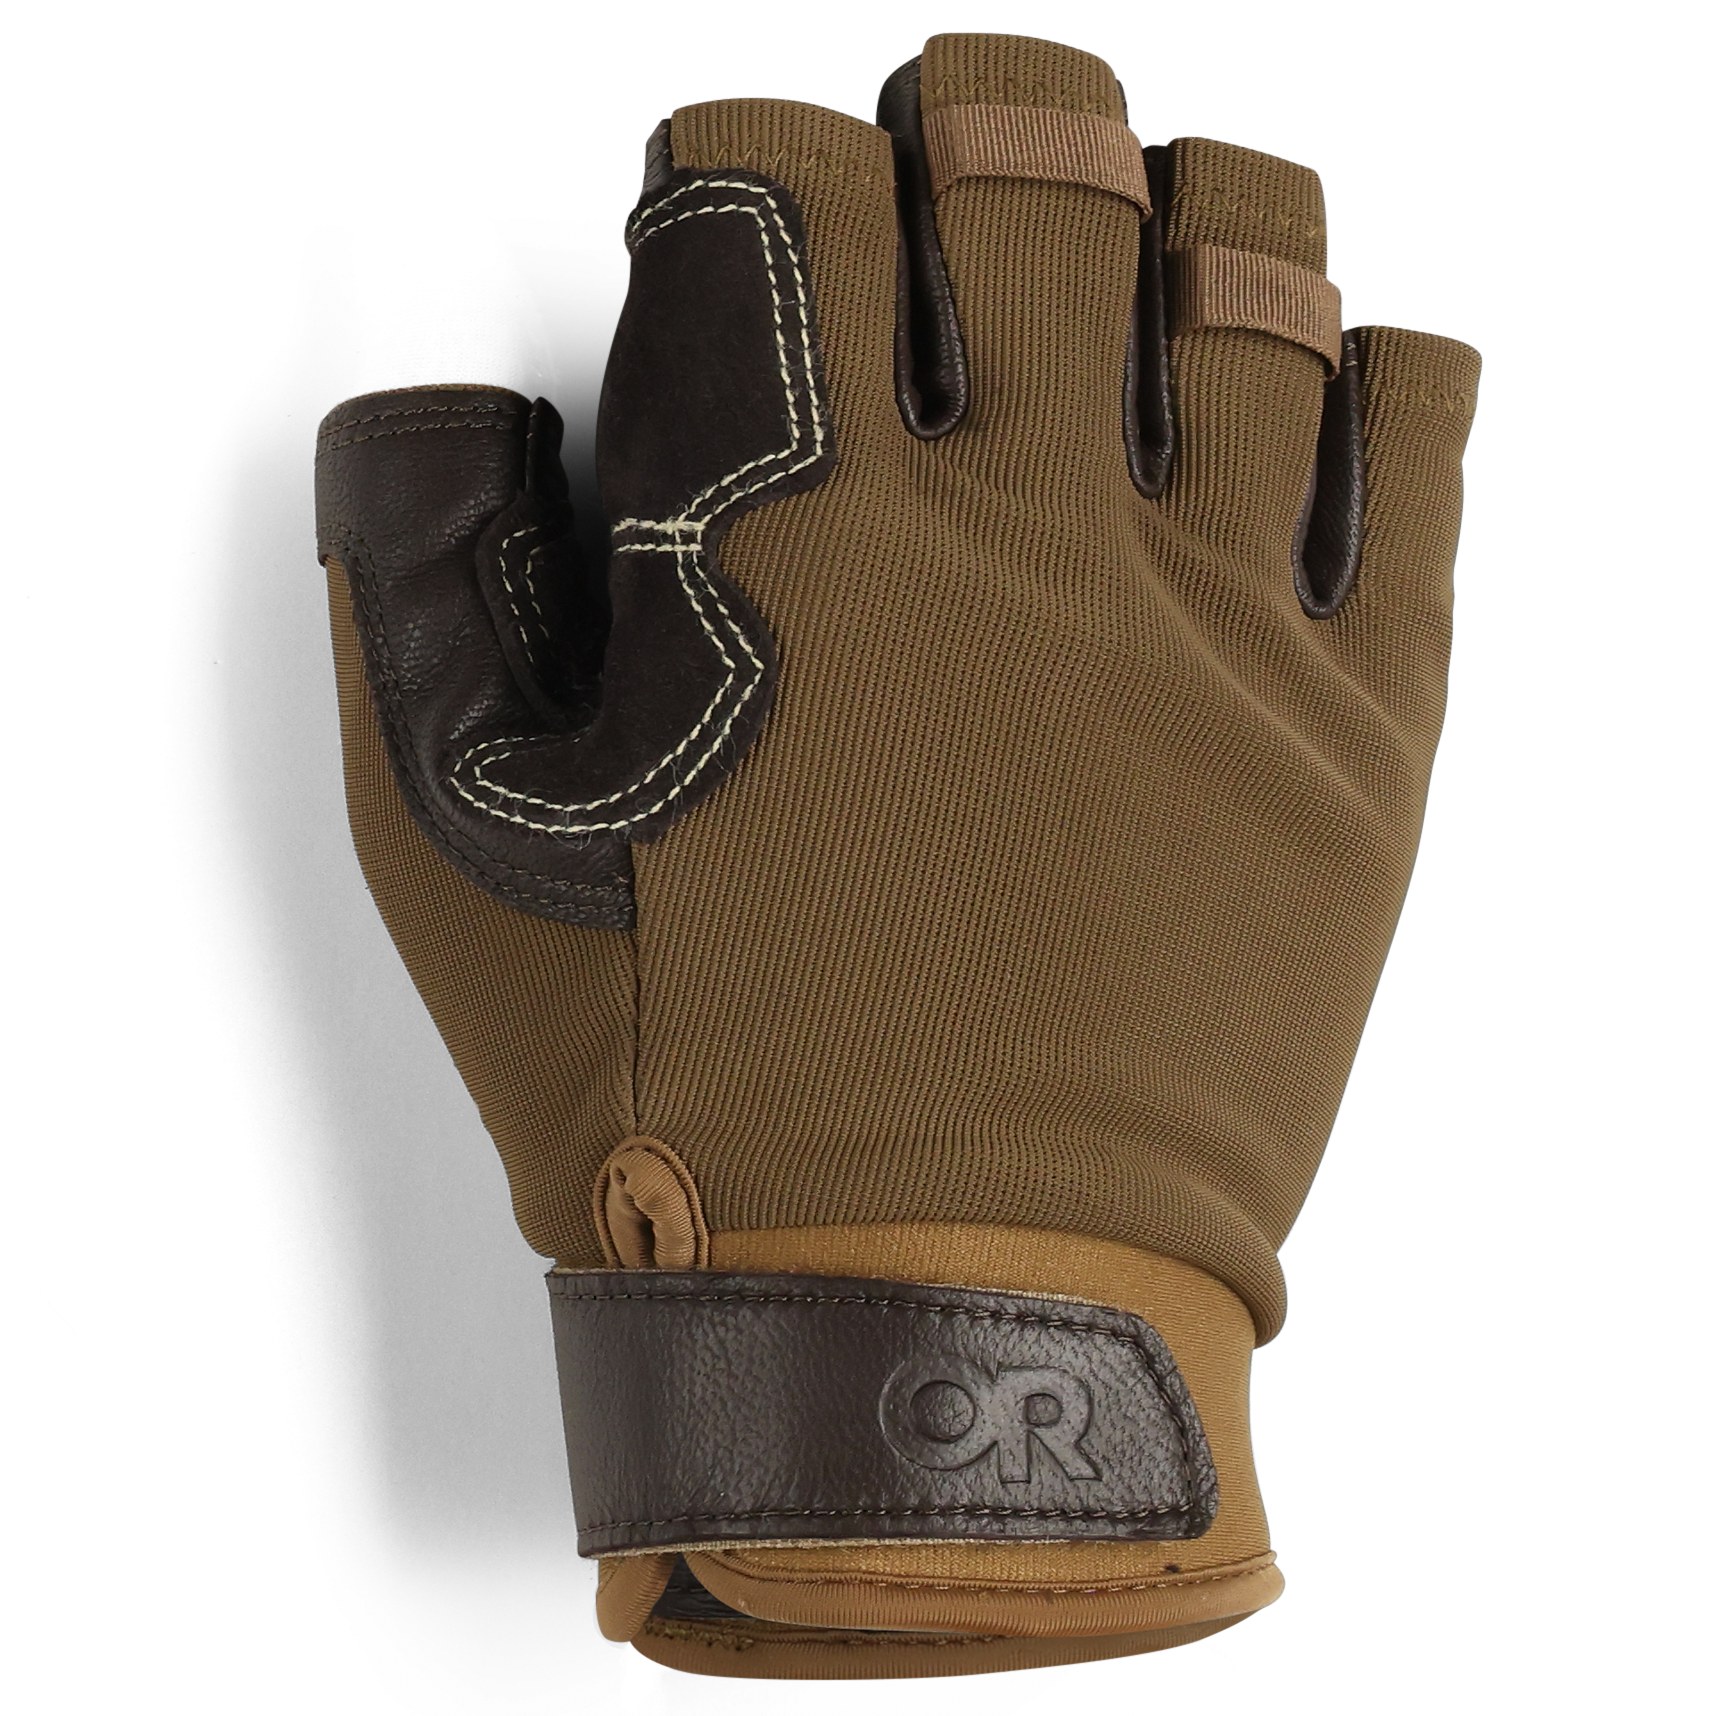 Produktbild von Outdoor Research Fossil Rock II Handschuhe - coyote/chocolate